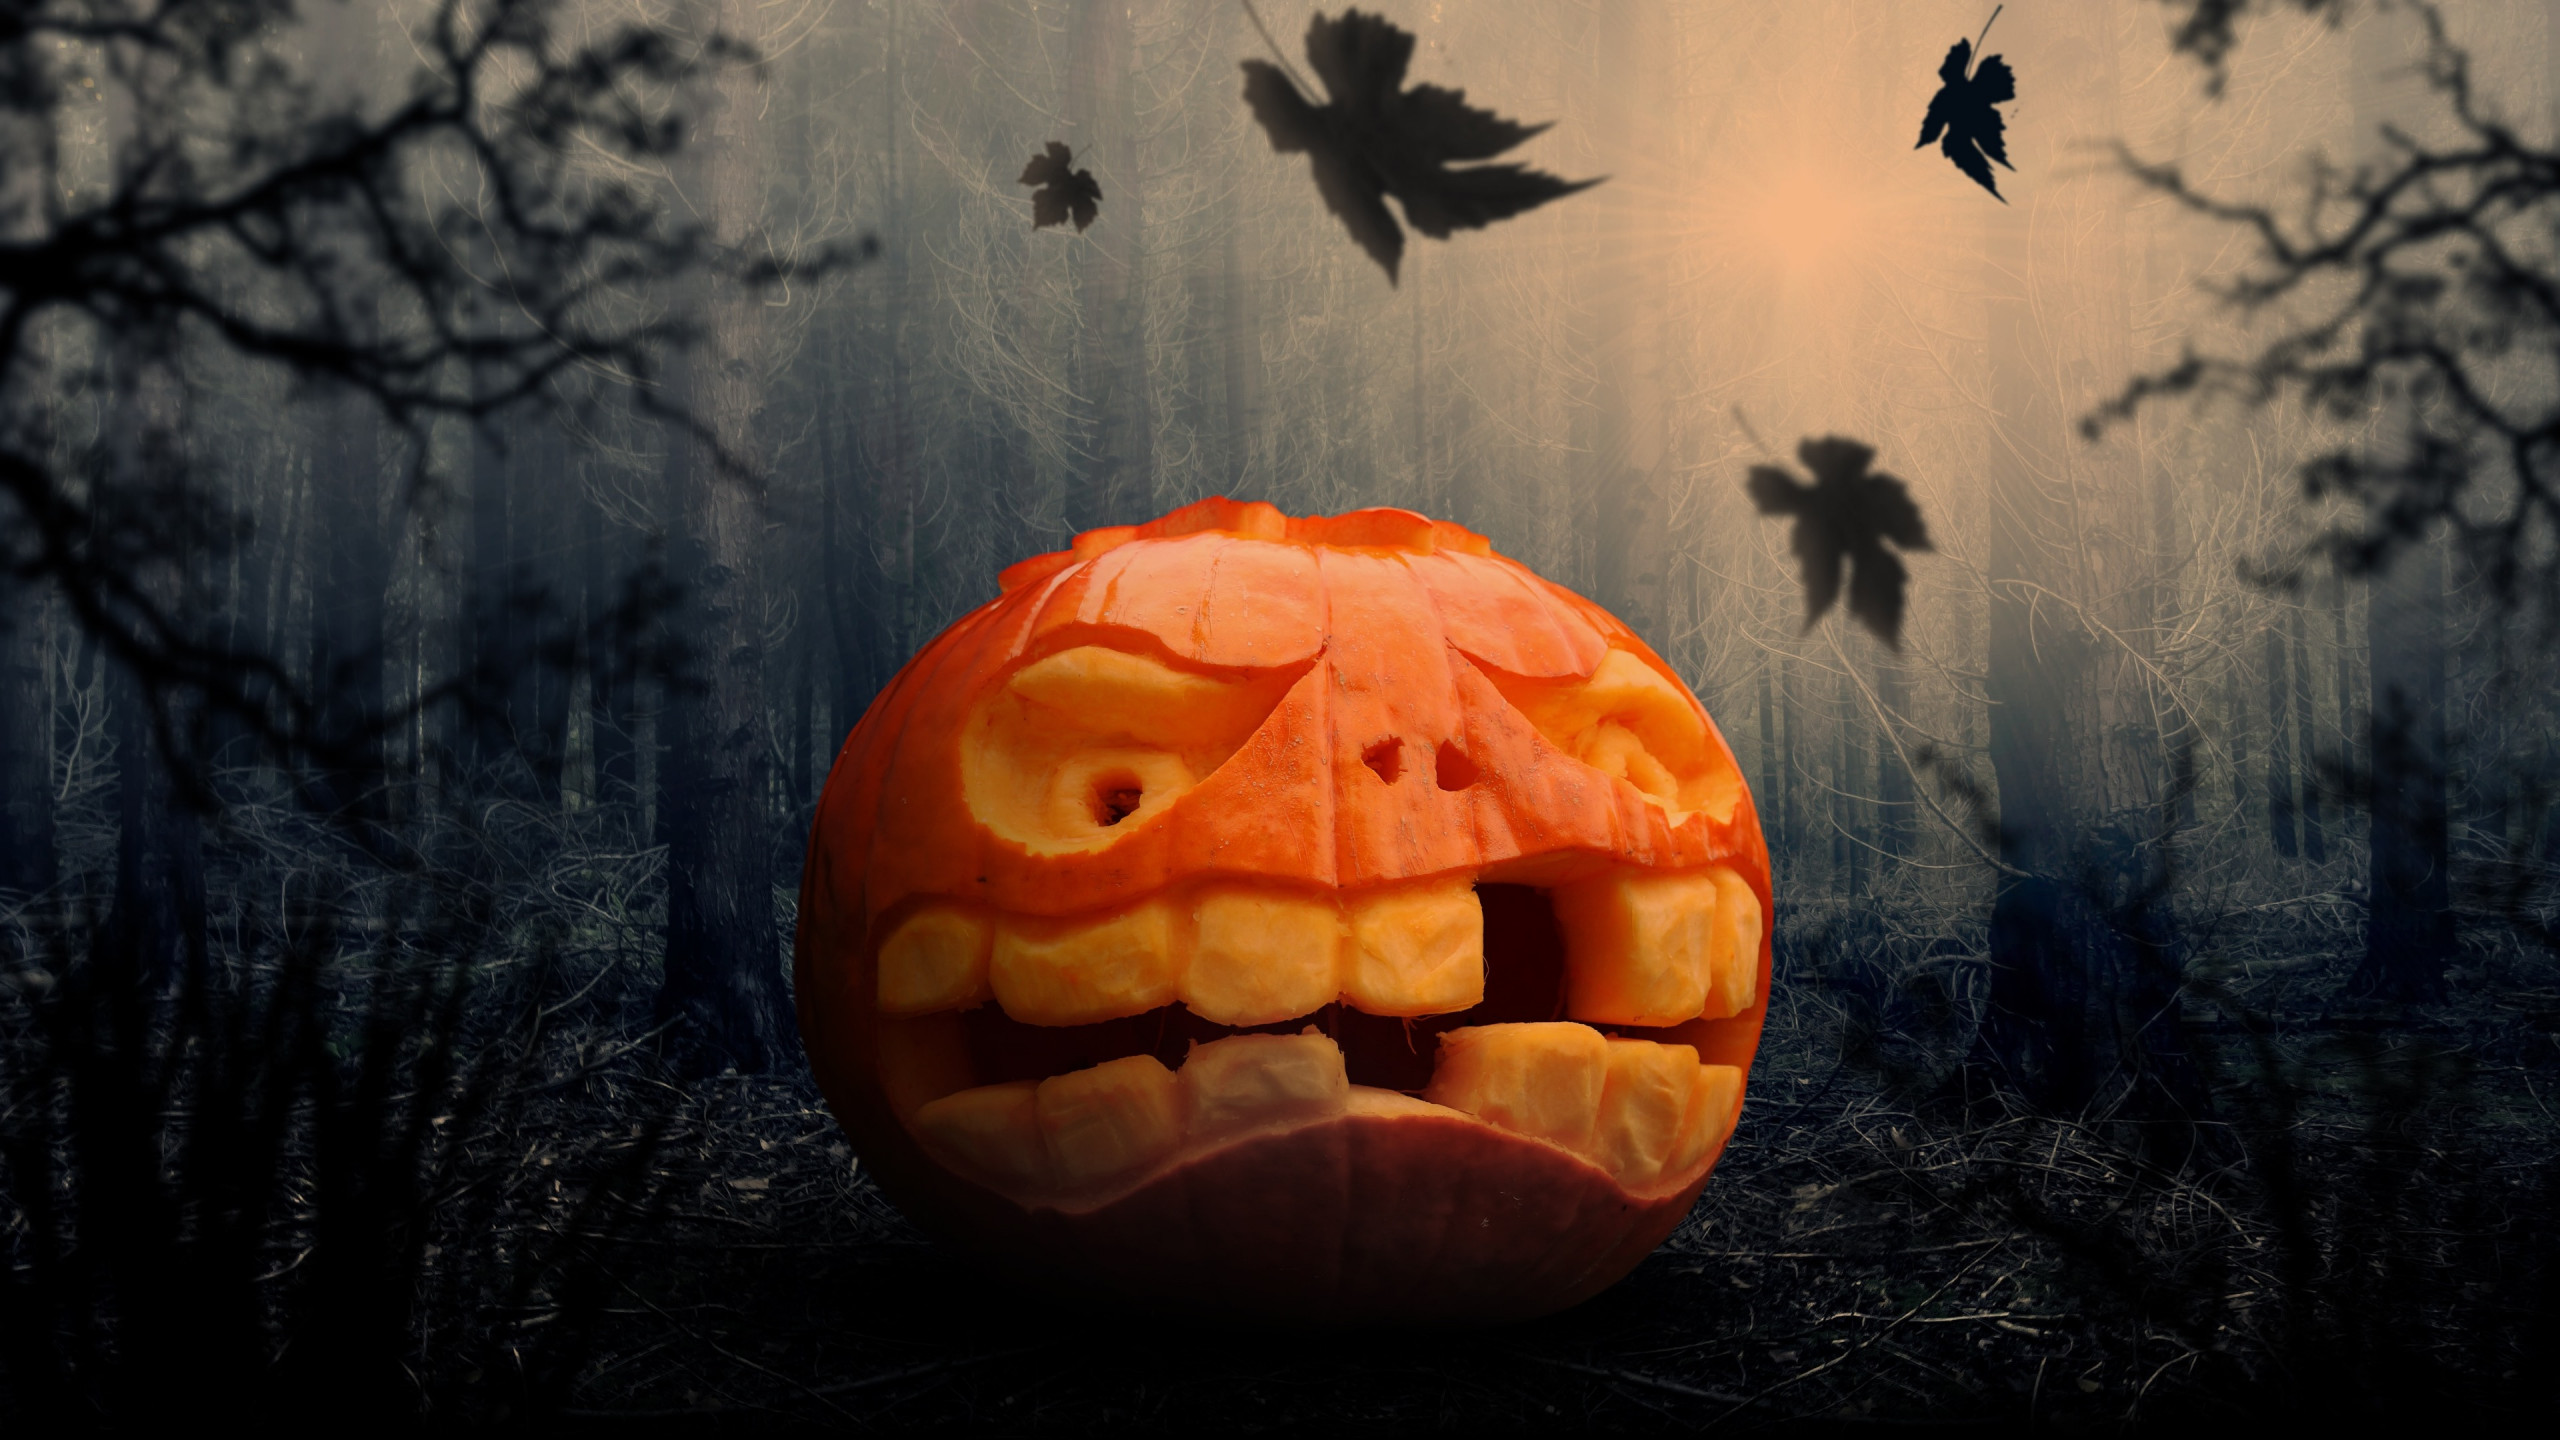 Download wallpaper: Halloween pumpkin 2560x1440